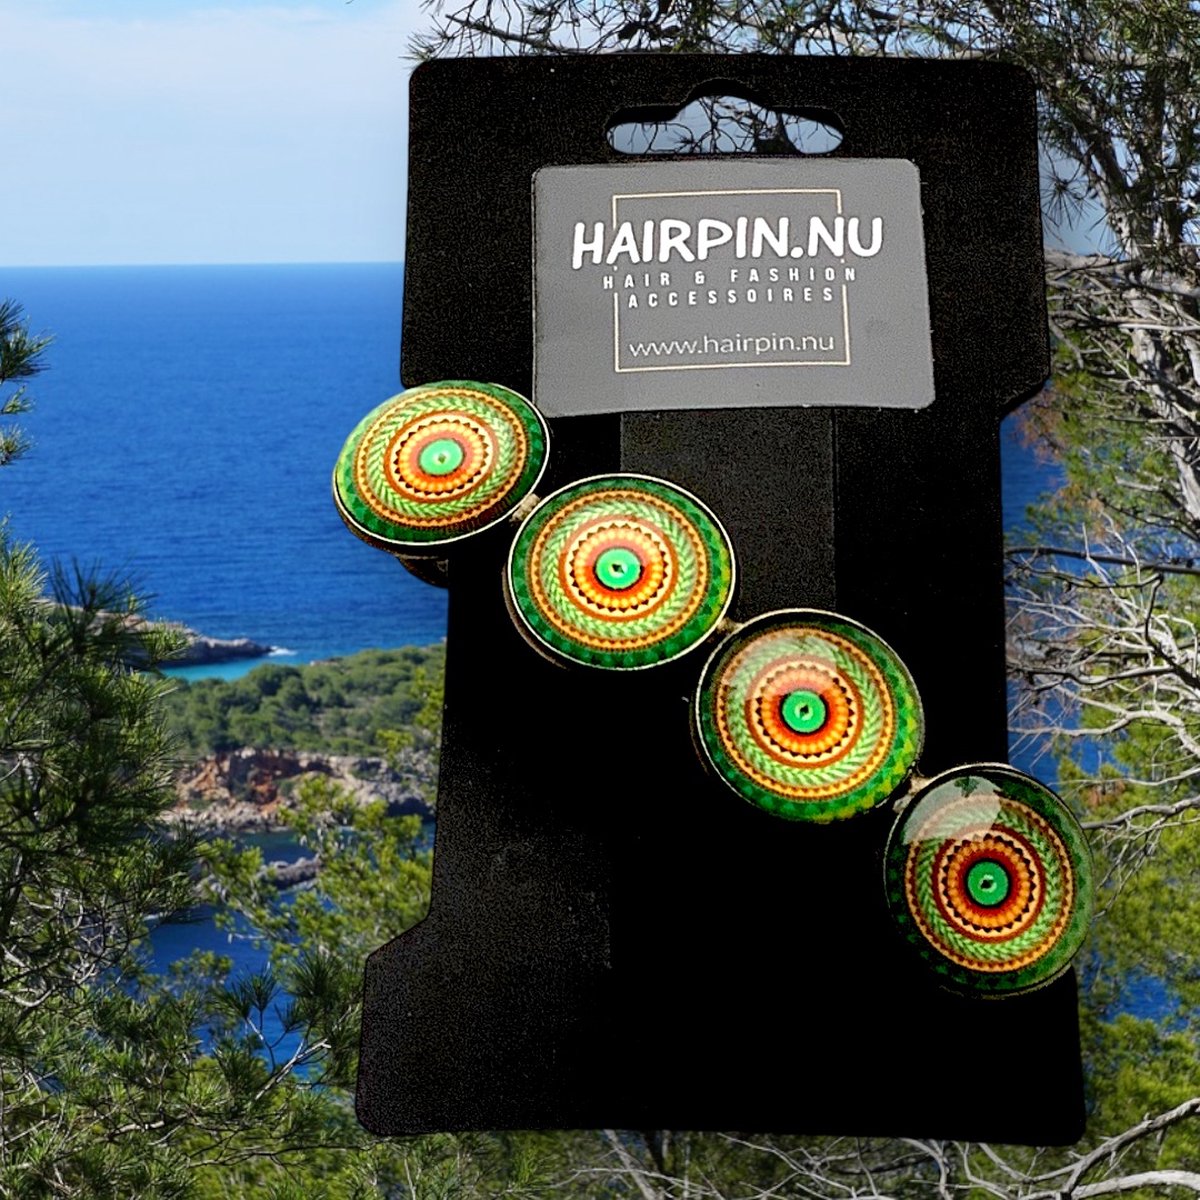 Hairpin.nu-Hairclip-glas cabochon-haarspeld-mandala-bohemian-ibiza-boho-groen-oranje-print